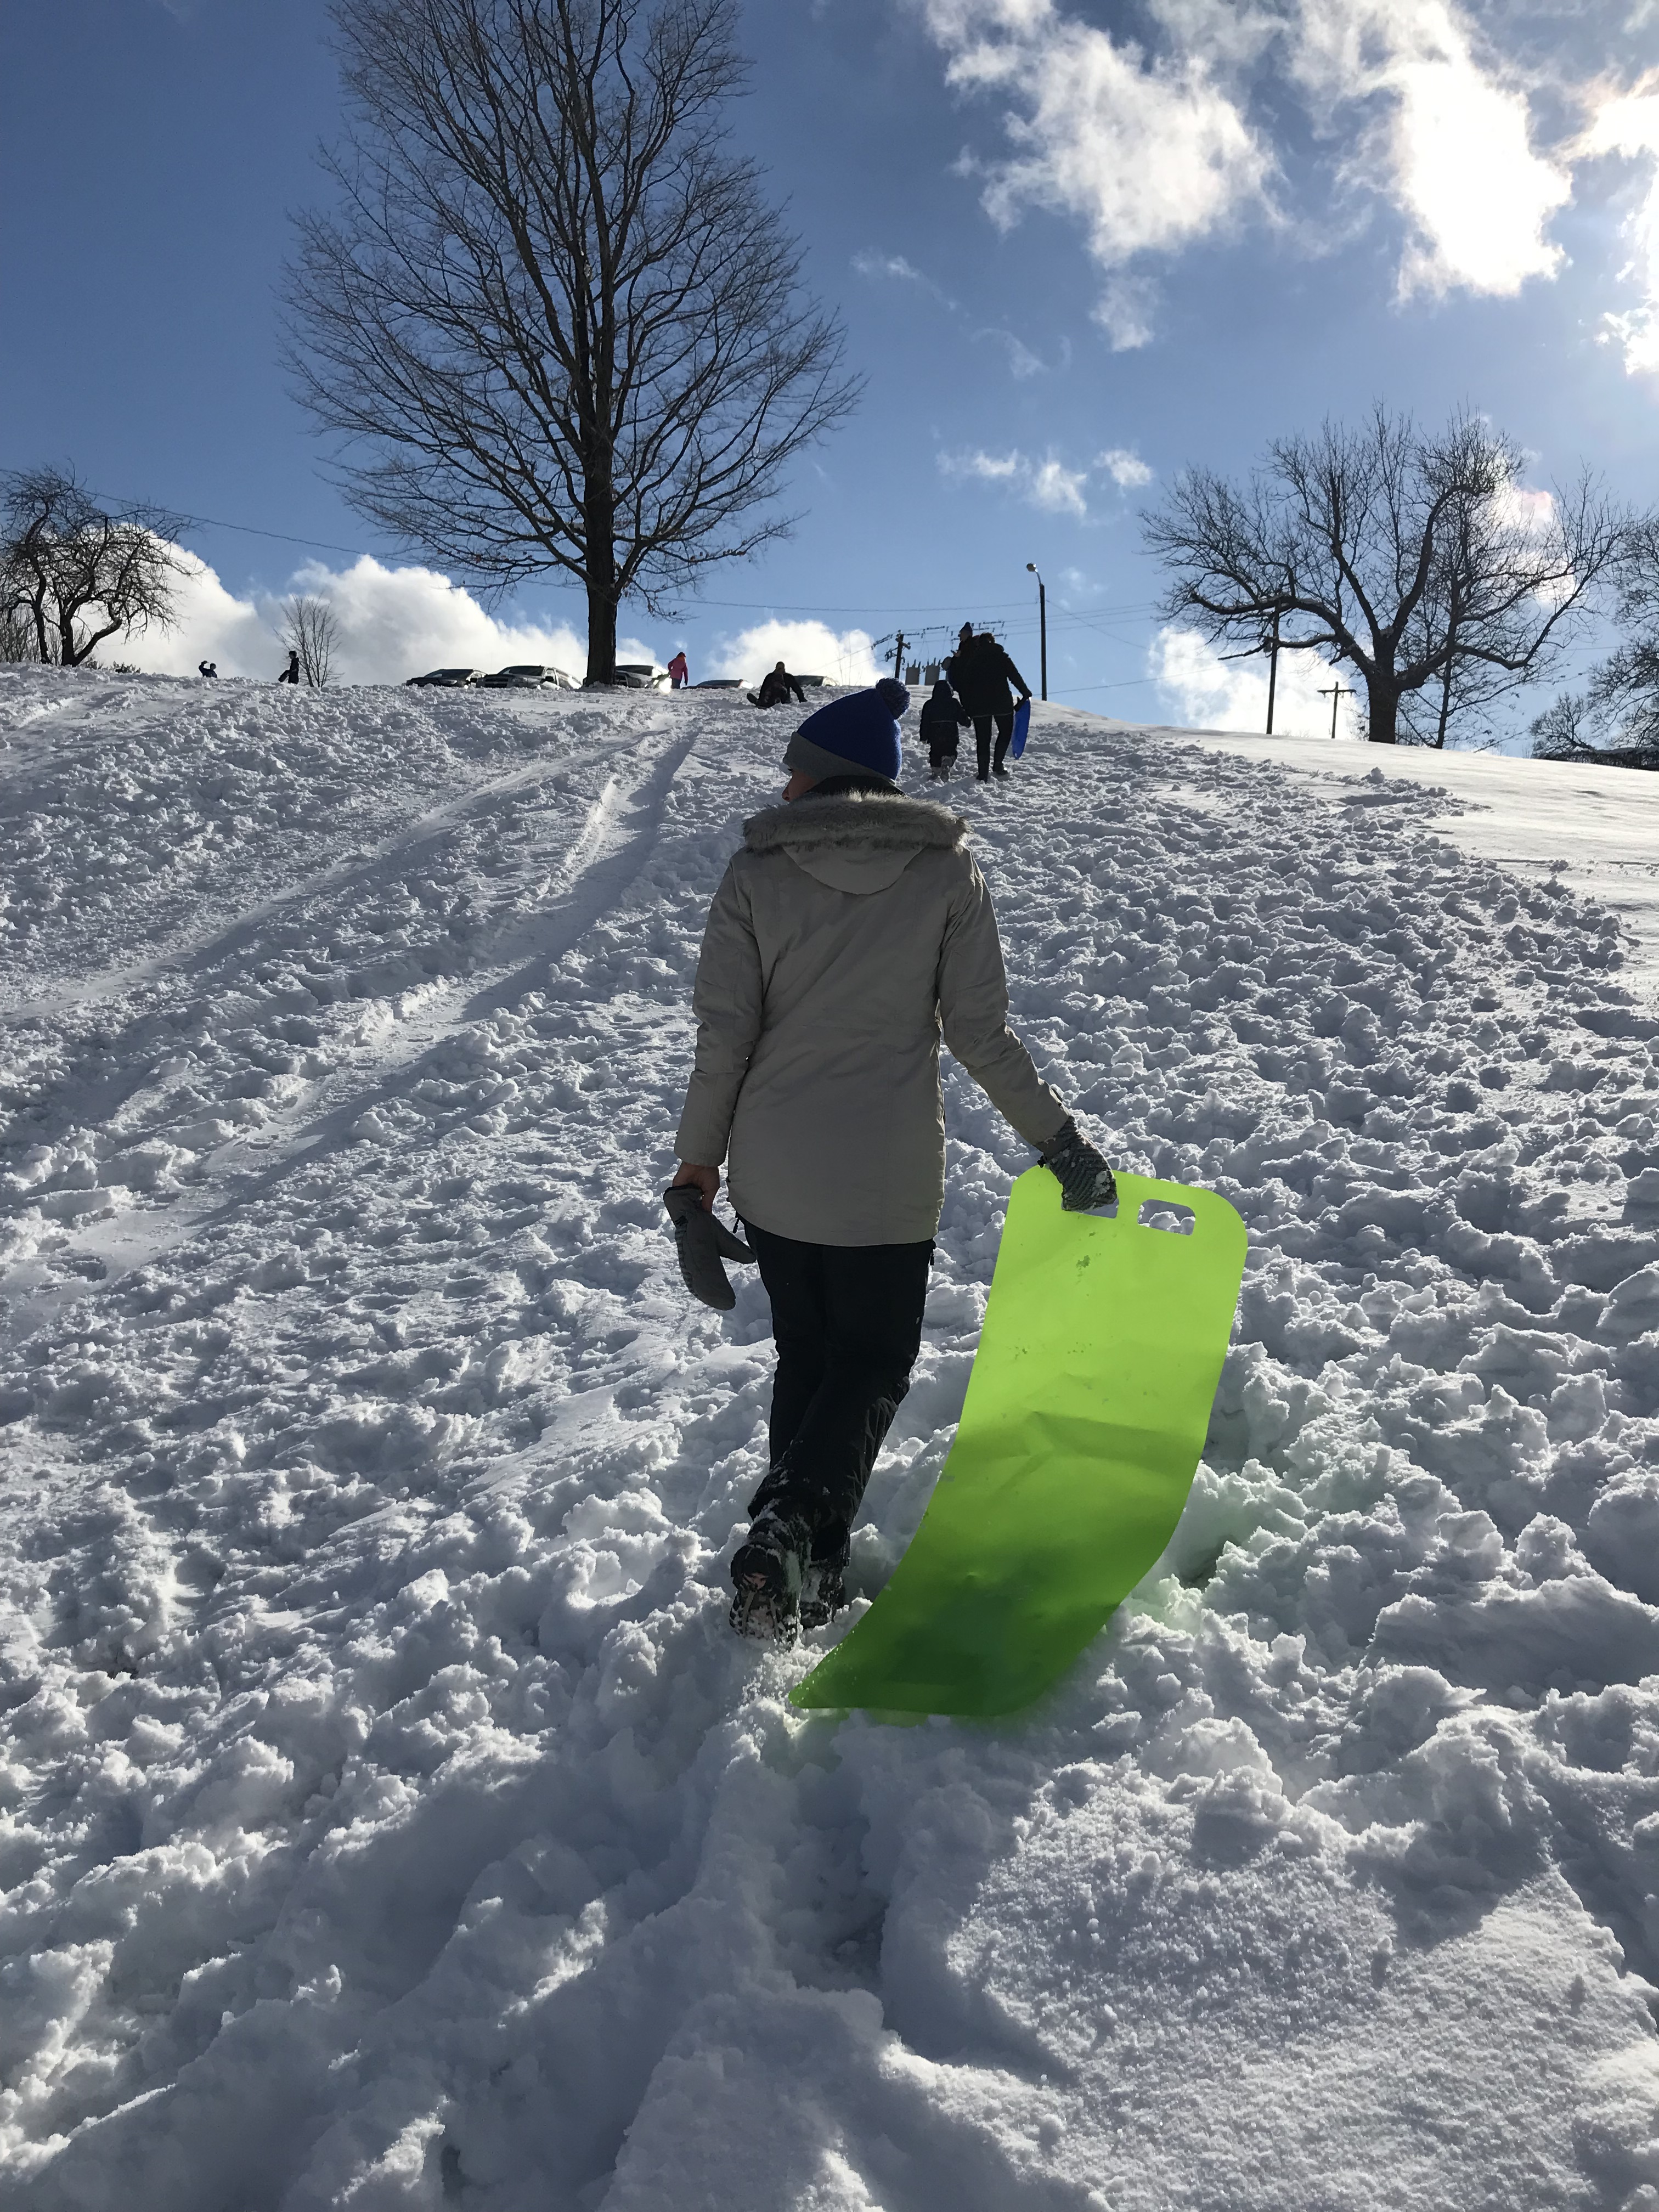 People enjoying sledding activities on Burgher Hill